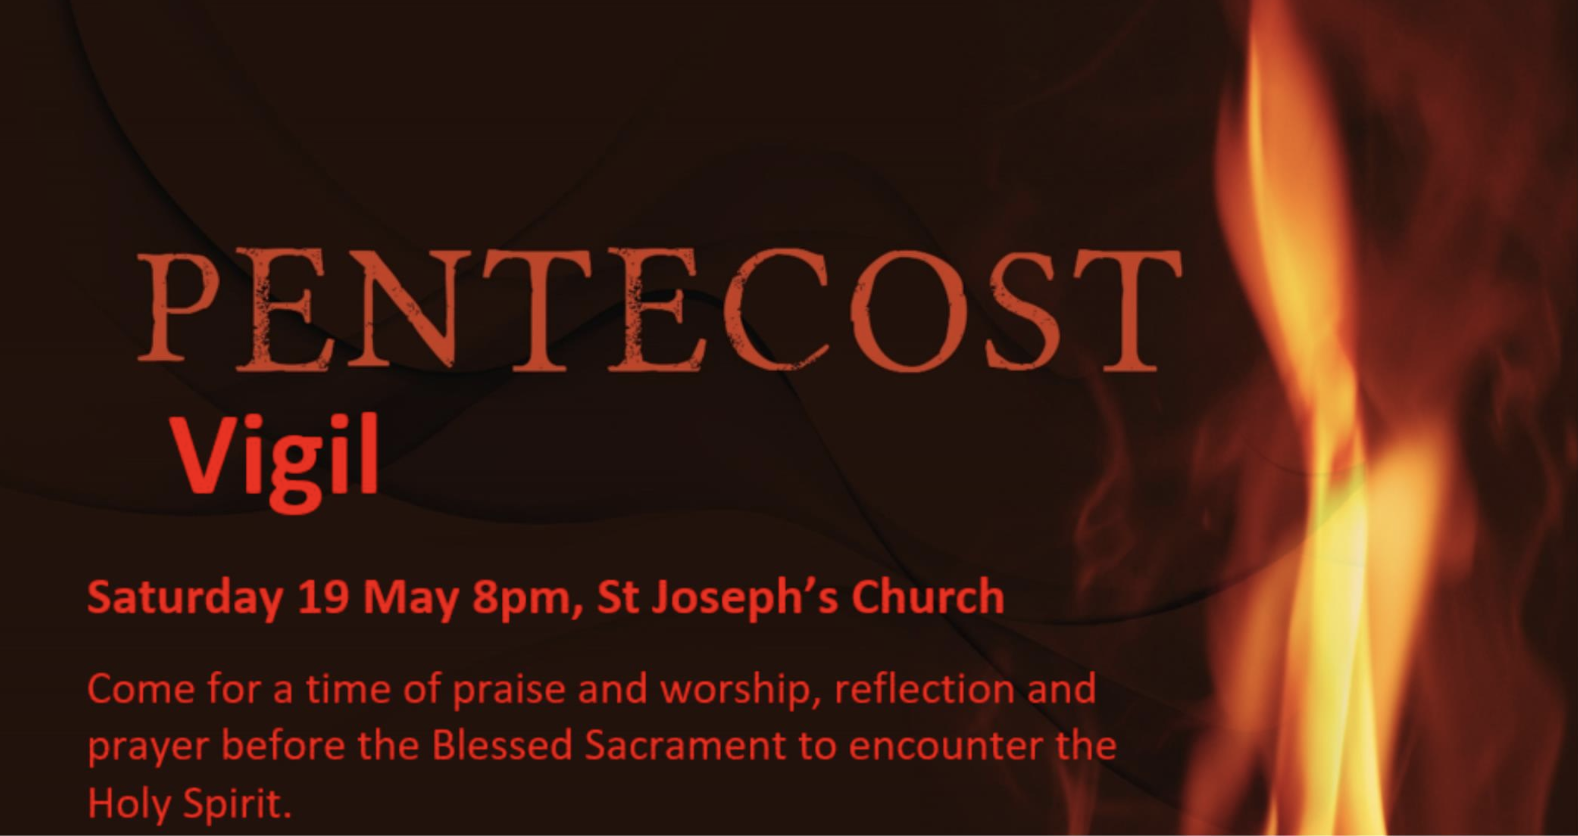 Pentecost vigil poster